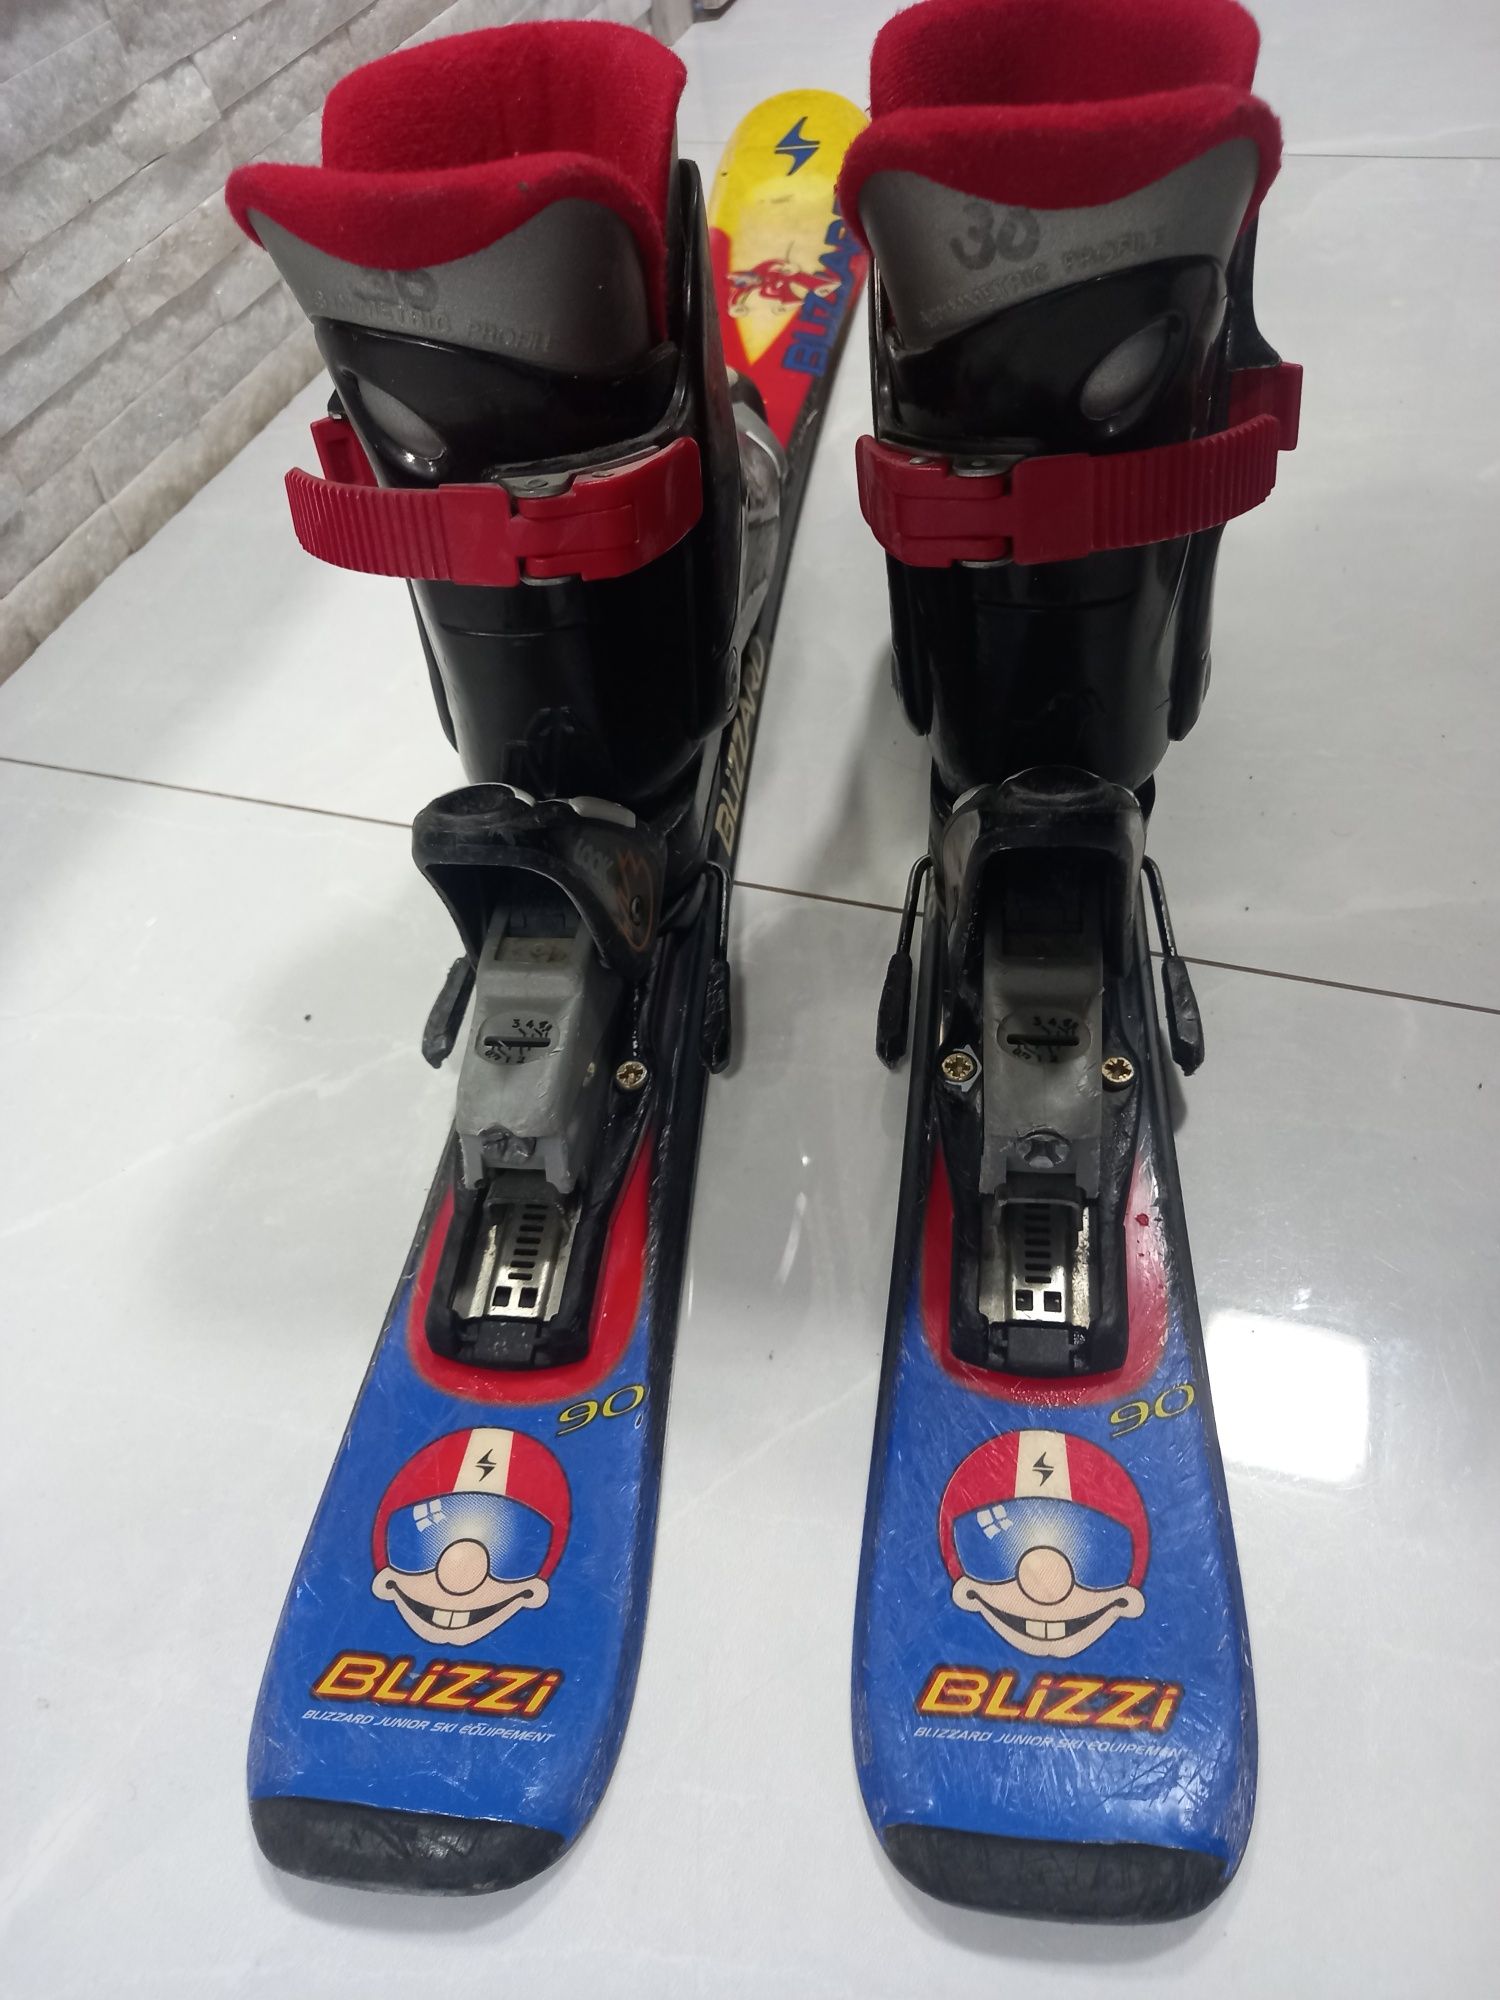 Narty Blizzard 90 cm + buty narciarskie Nordica rozm. 30